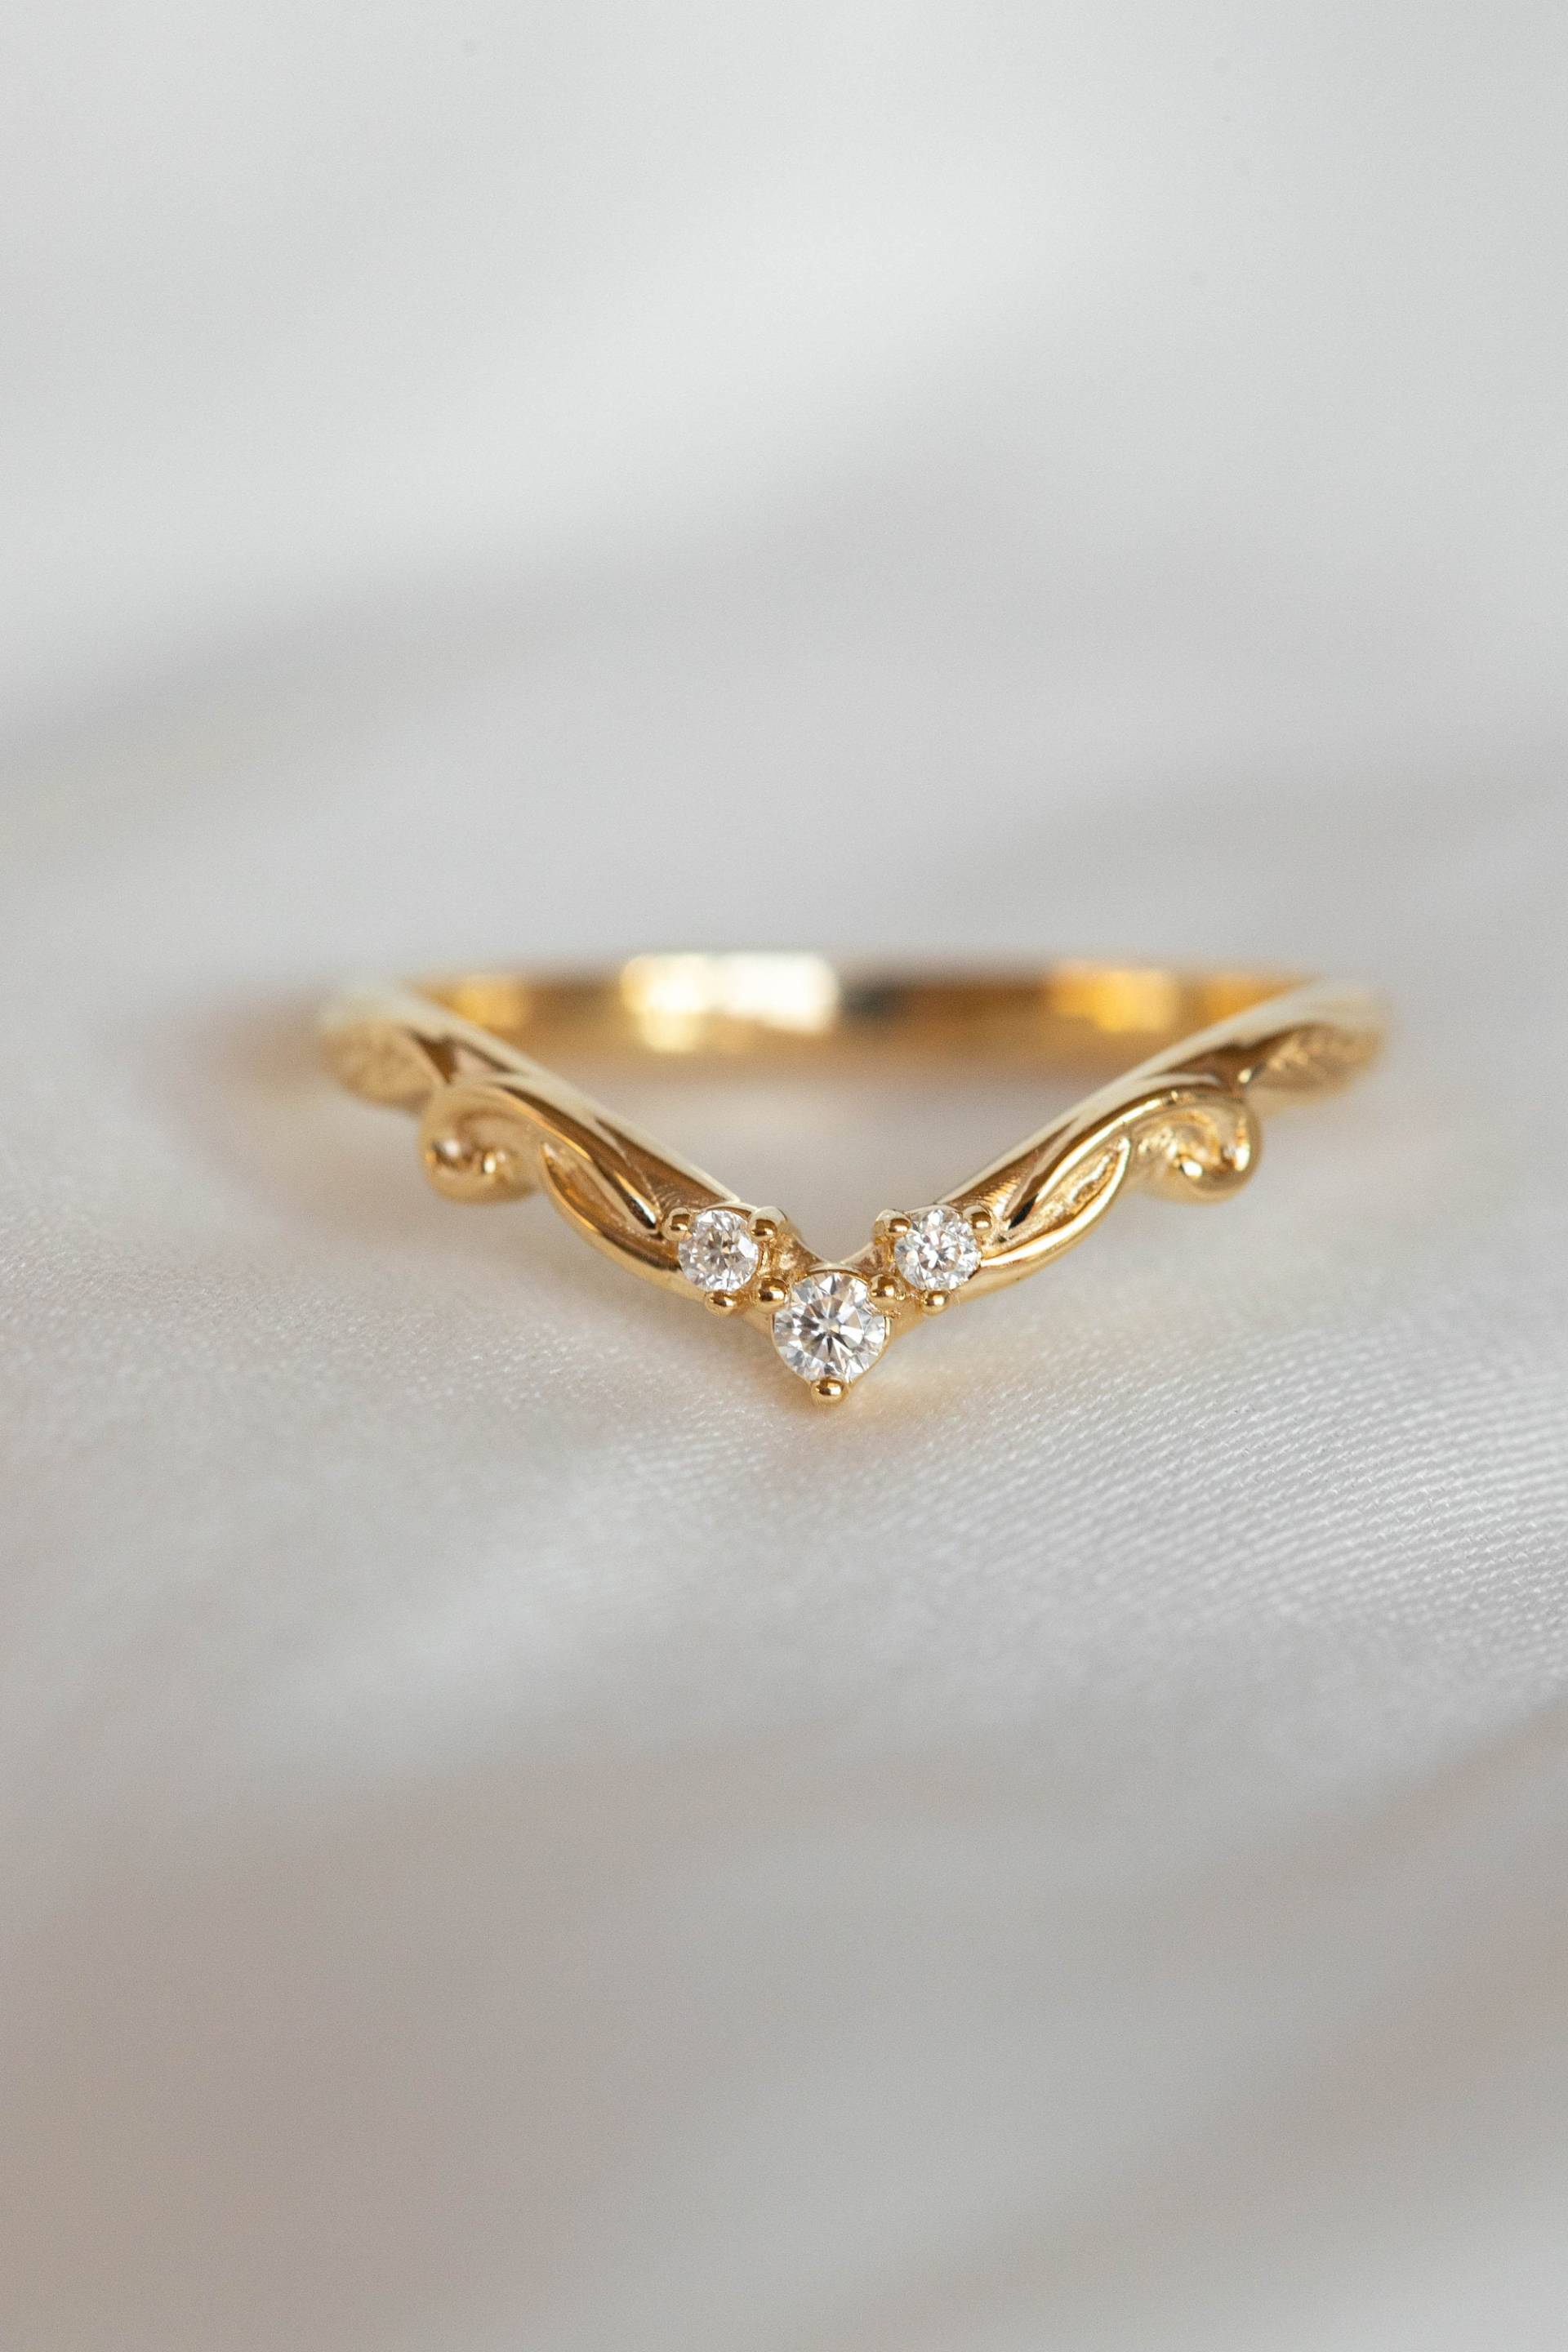 Drei Diamant Blätter Ehering, Stapelbarer Natur Inspirierter Goldring Für Frau, 14K Oder 18K Gold von EdenGardenJewelry